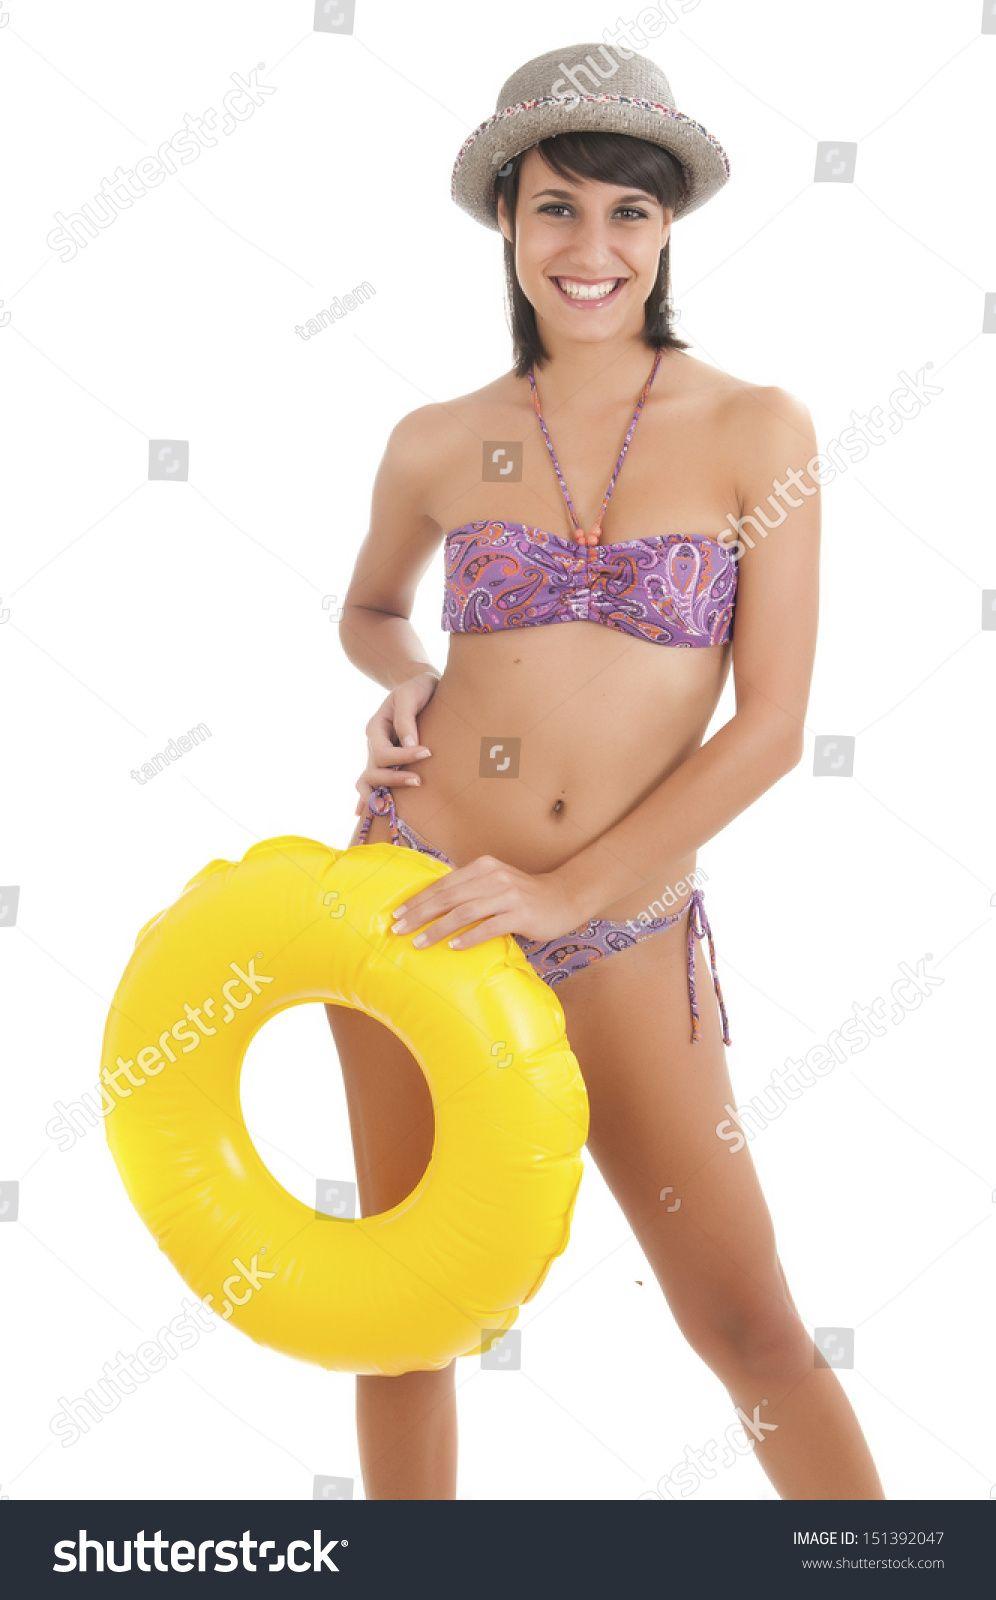 best of Bikini woman Personal homepage photo